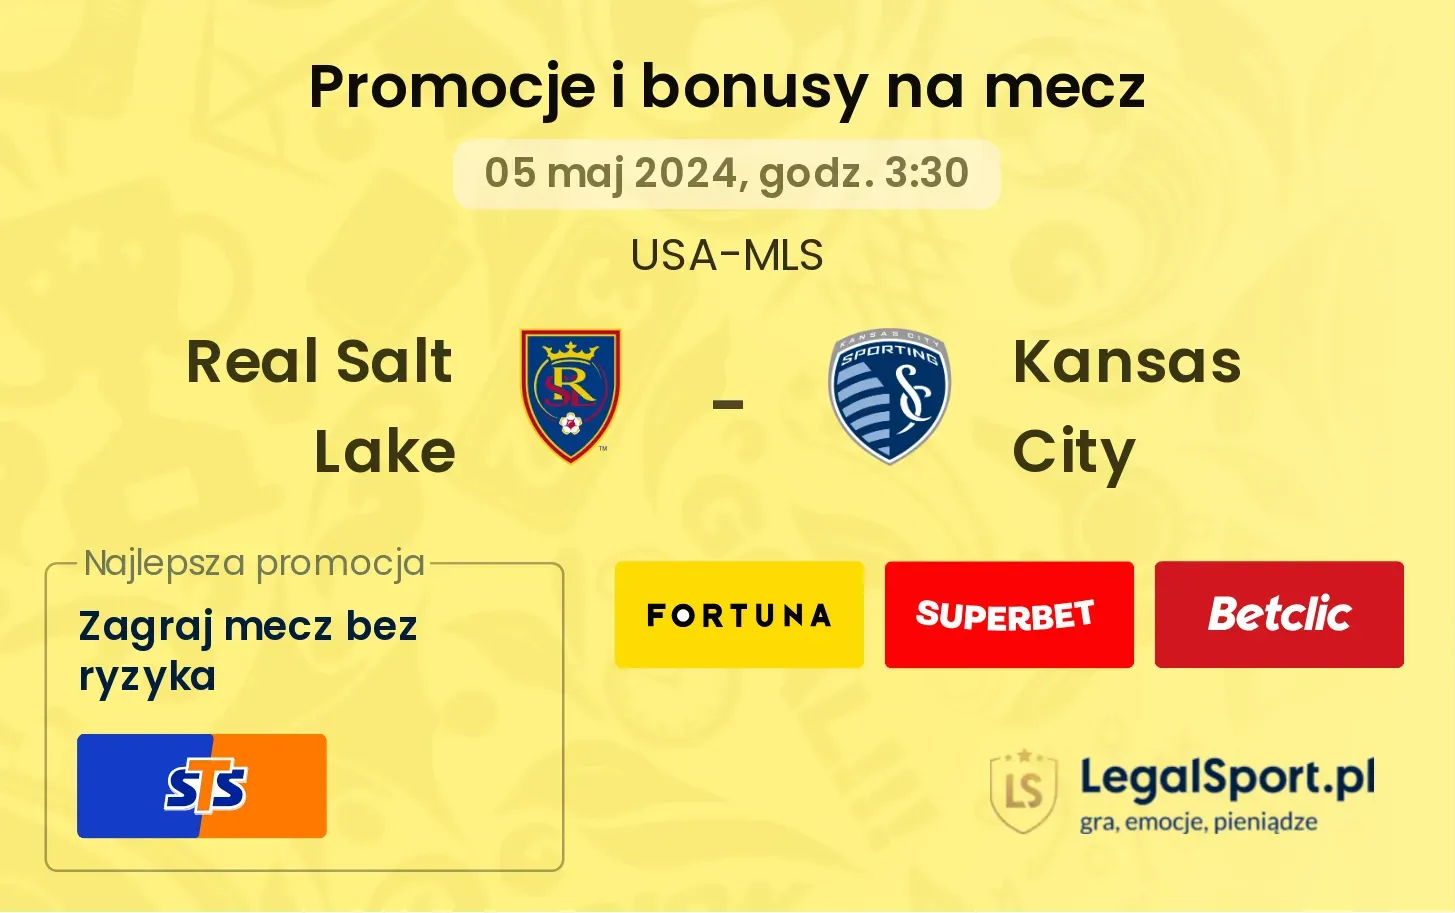 Real Salt Lake - Kansas City promocje bonusy na mecz